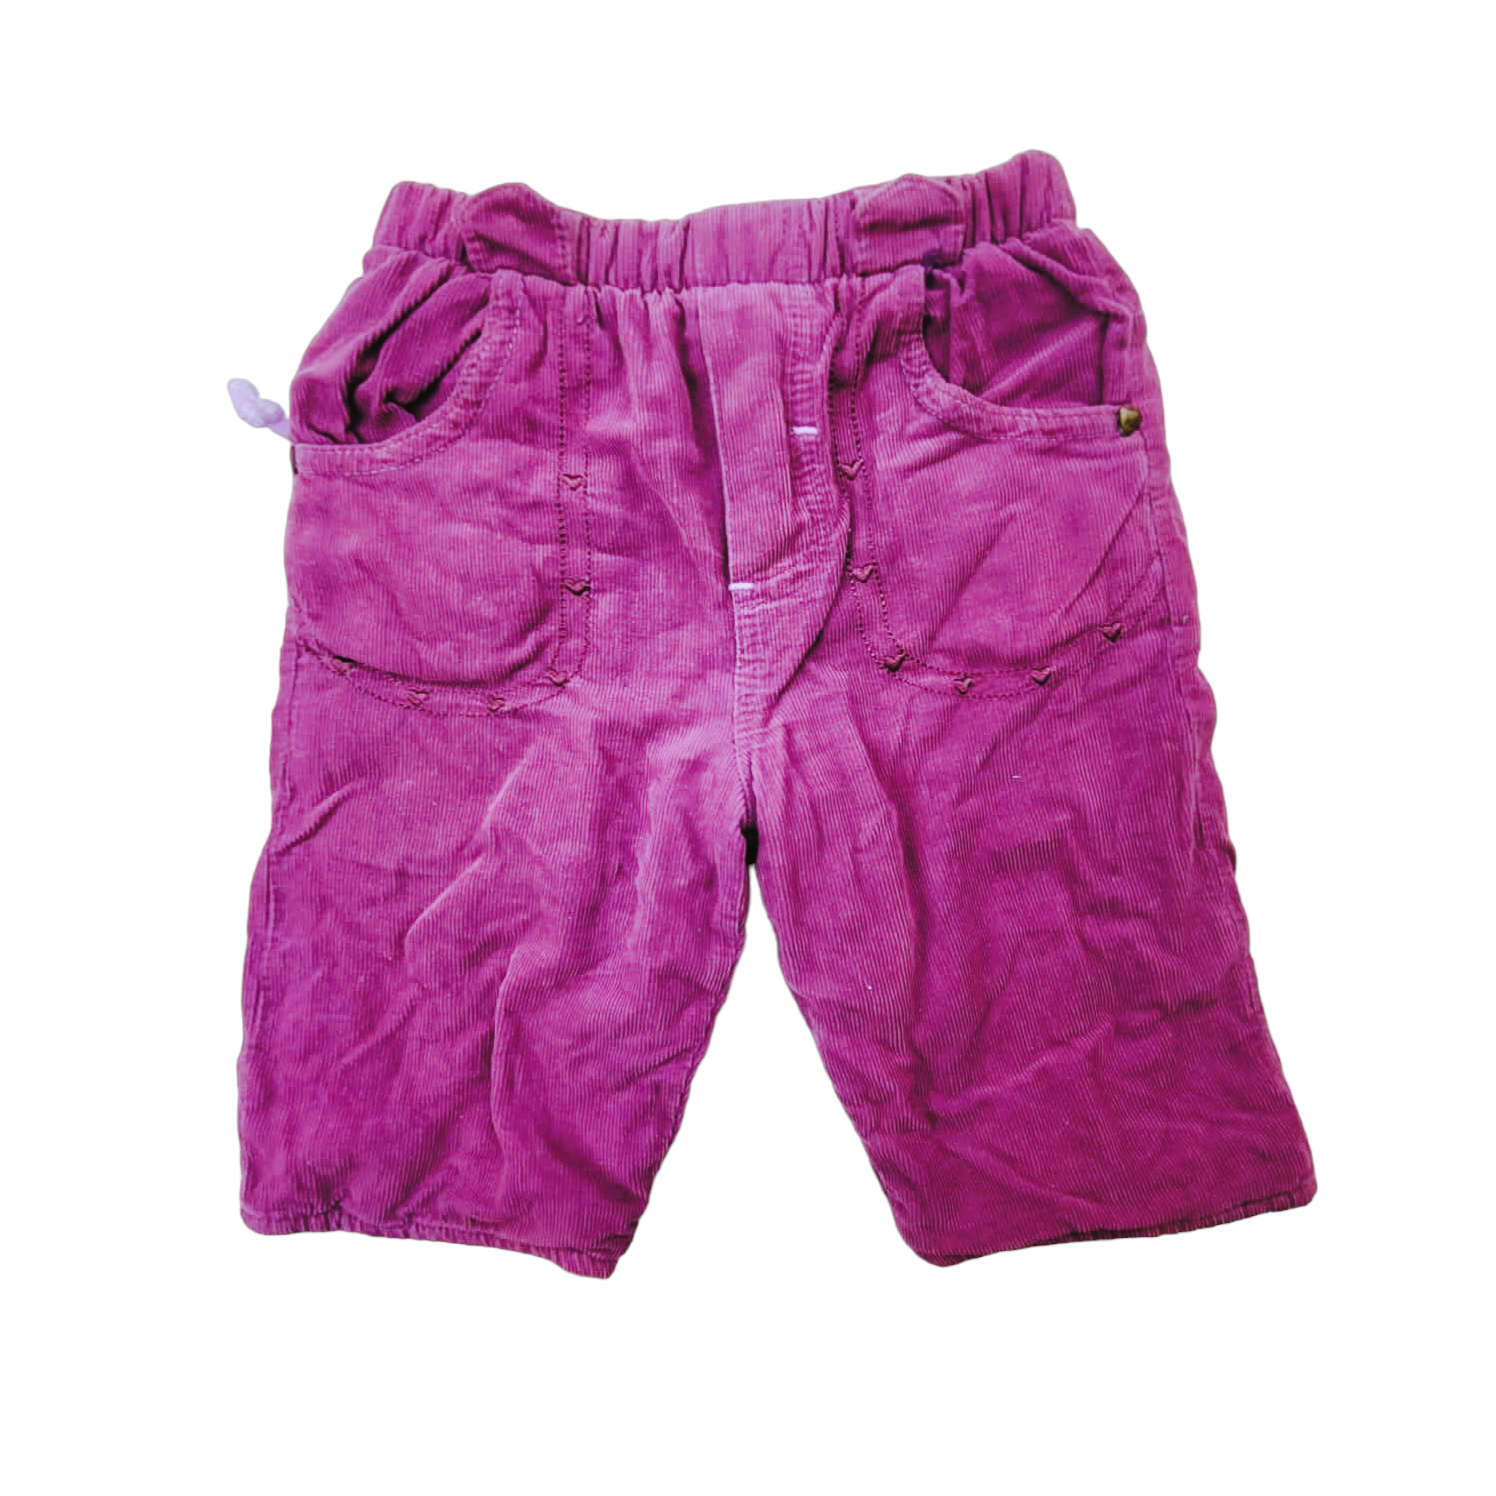 Pantalon de cotele lila forrado con interior de algodon